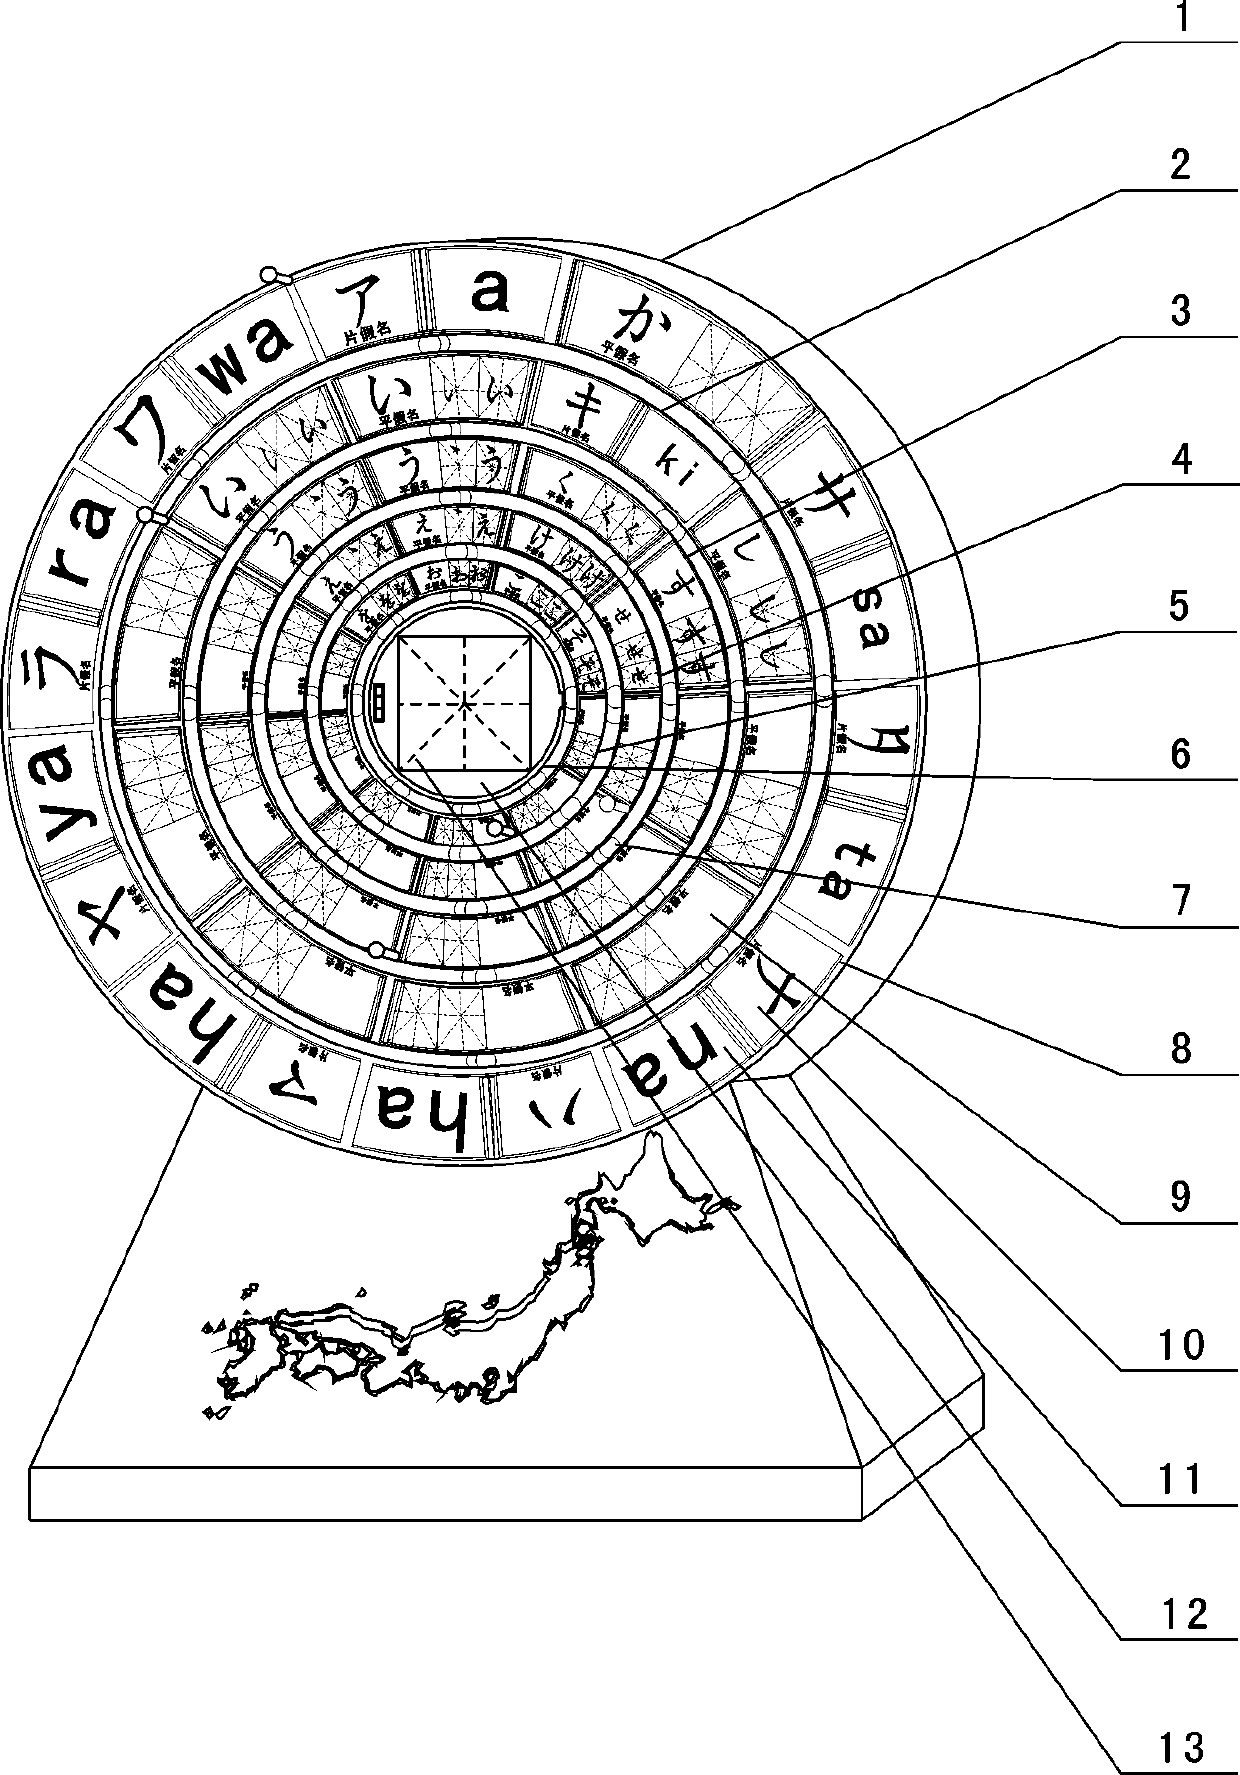 Teaching method for Japanese Kana syllabary